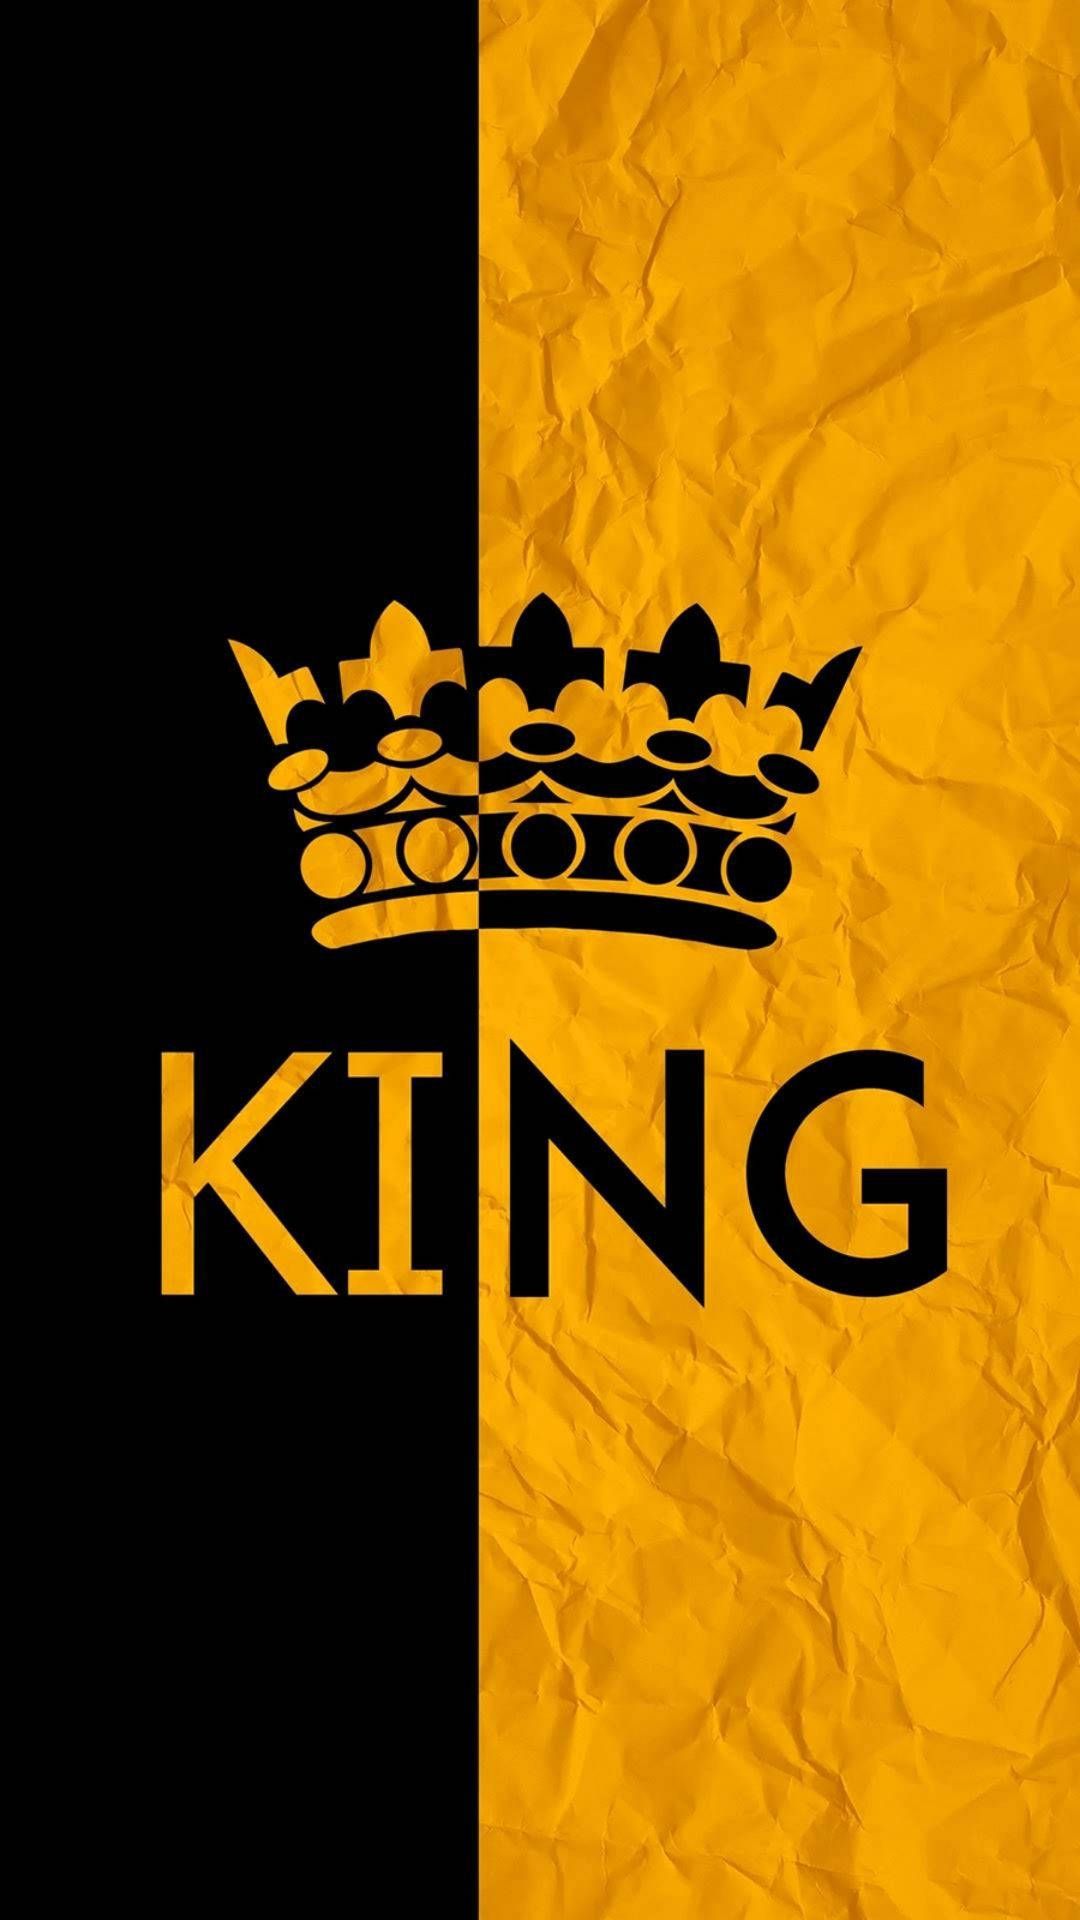 Download Aesthetic King Crown Wallpaper